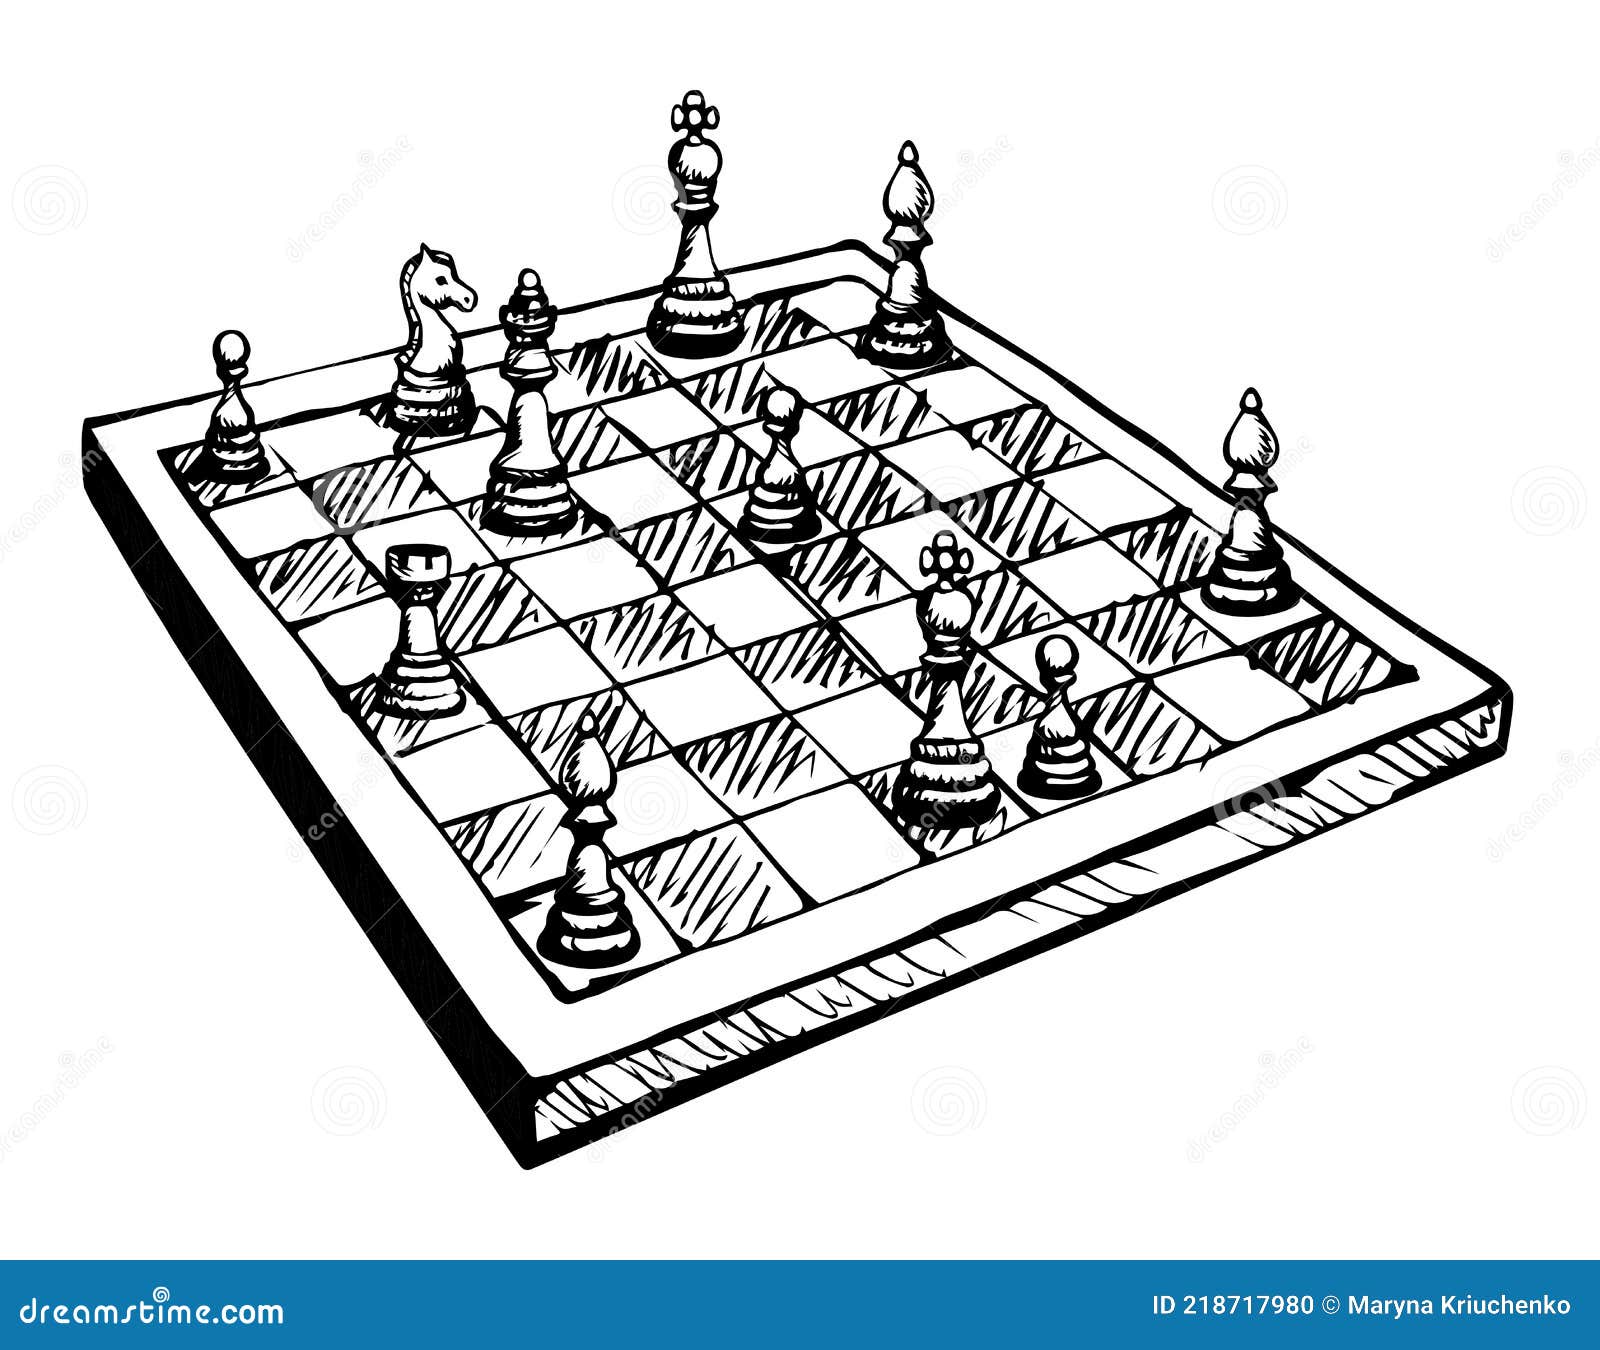 Gráfico de desenho animado de xadrez · Creative Fabrica